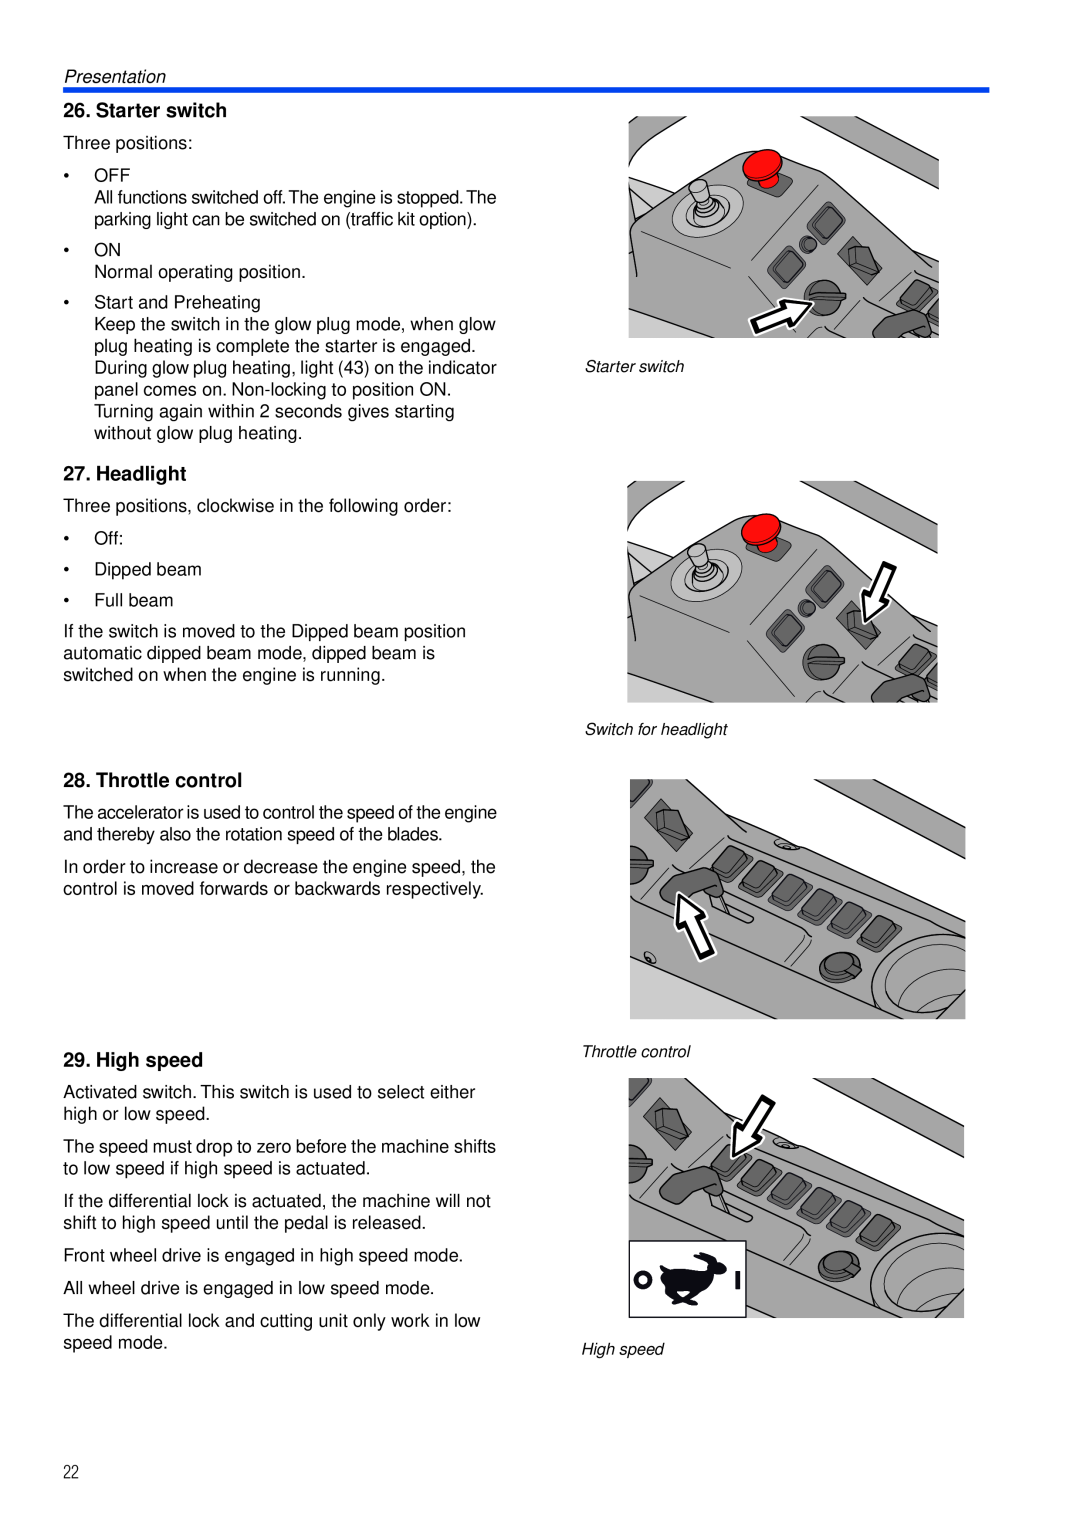 Husqvarna PT26 D manual Starter switch, Headlight, Throttle control, High speed, Presentation 